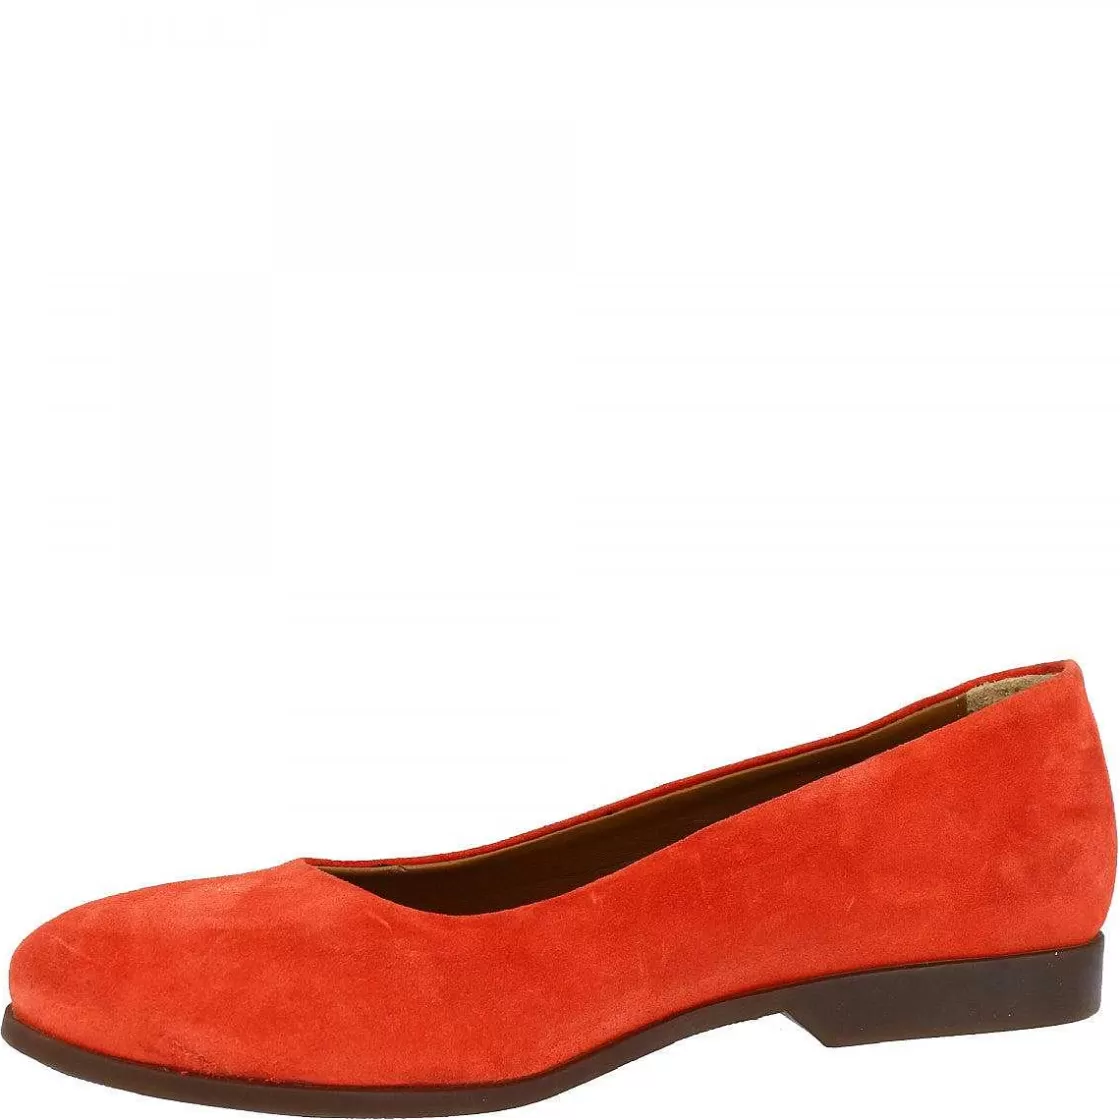 Leonardo Women'S Handmade Slip-On Ballet Flats In Red Suede Leather Best Sale